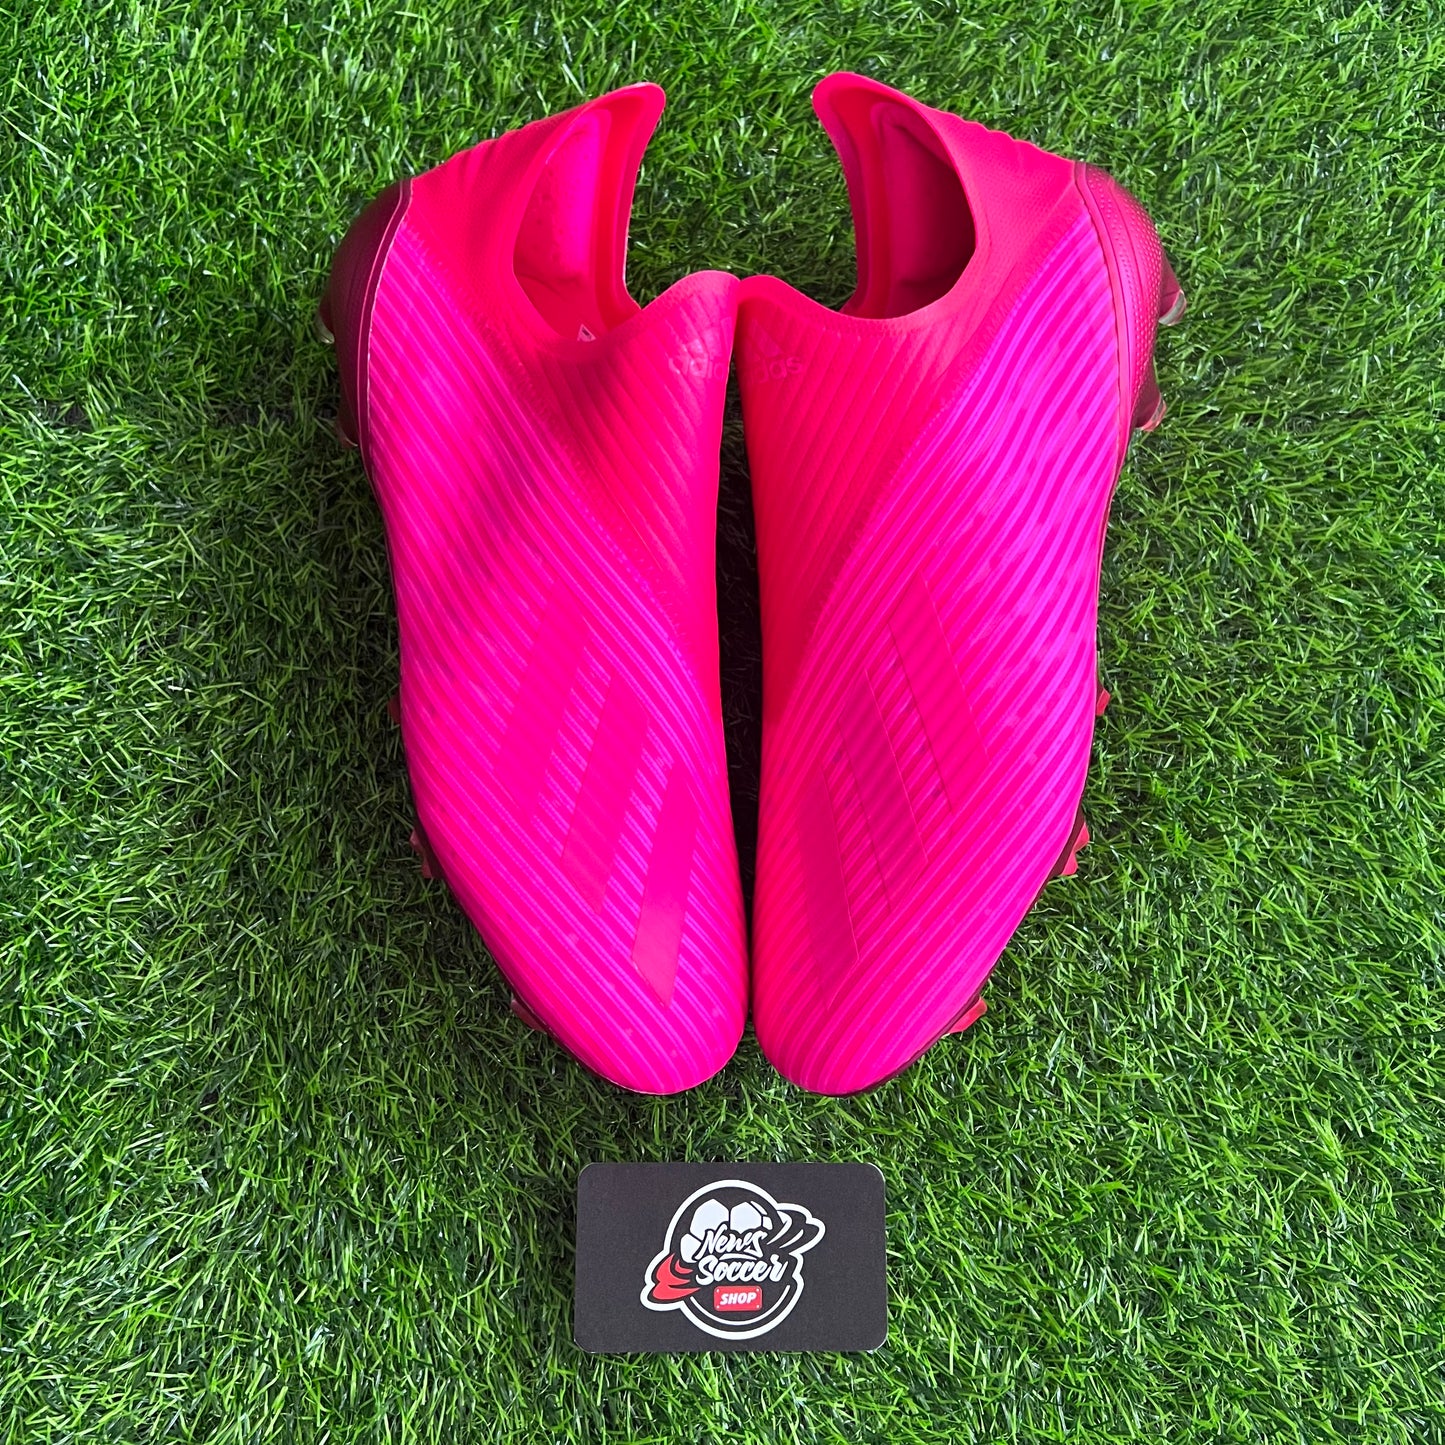 Adidas X 19+ “Shock Pink” Sample (FG) & (AG)